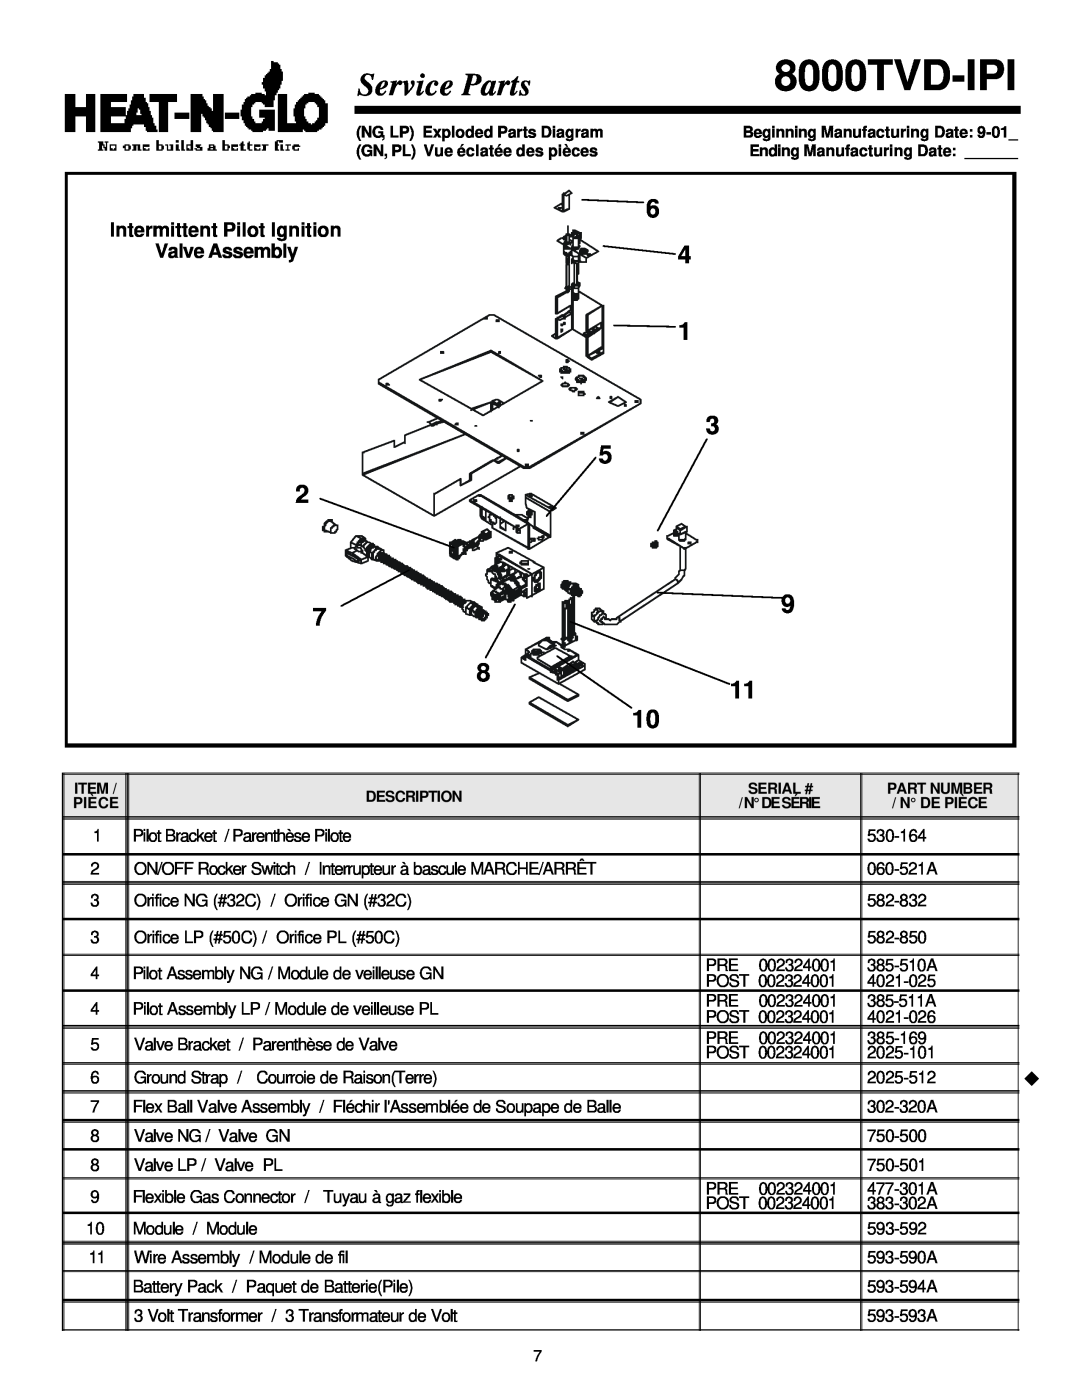 Heat & Glo LifeStyle manual 8000TVD-IPI, Intermittent Pilot Ignition Valve Assembly, Service Parts 